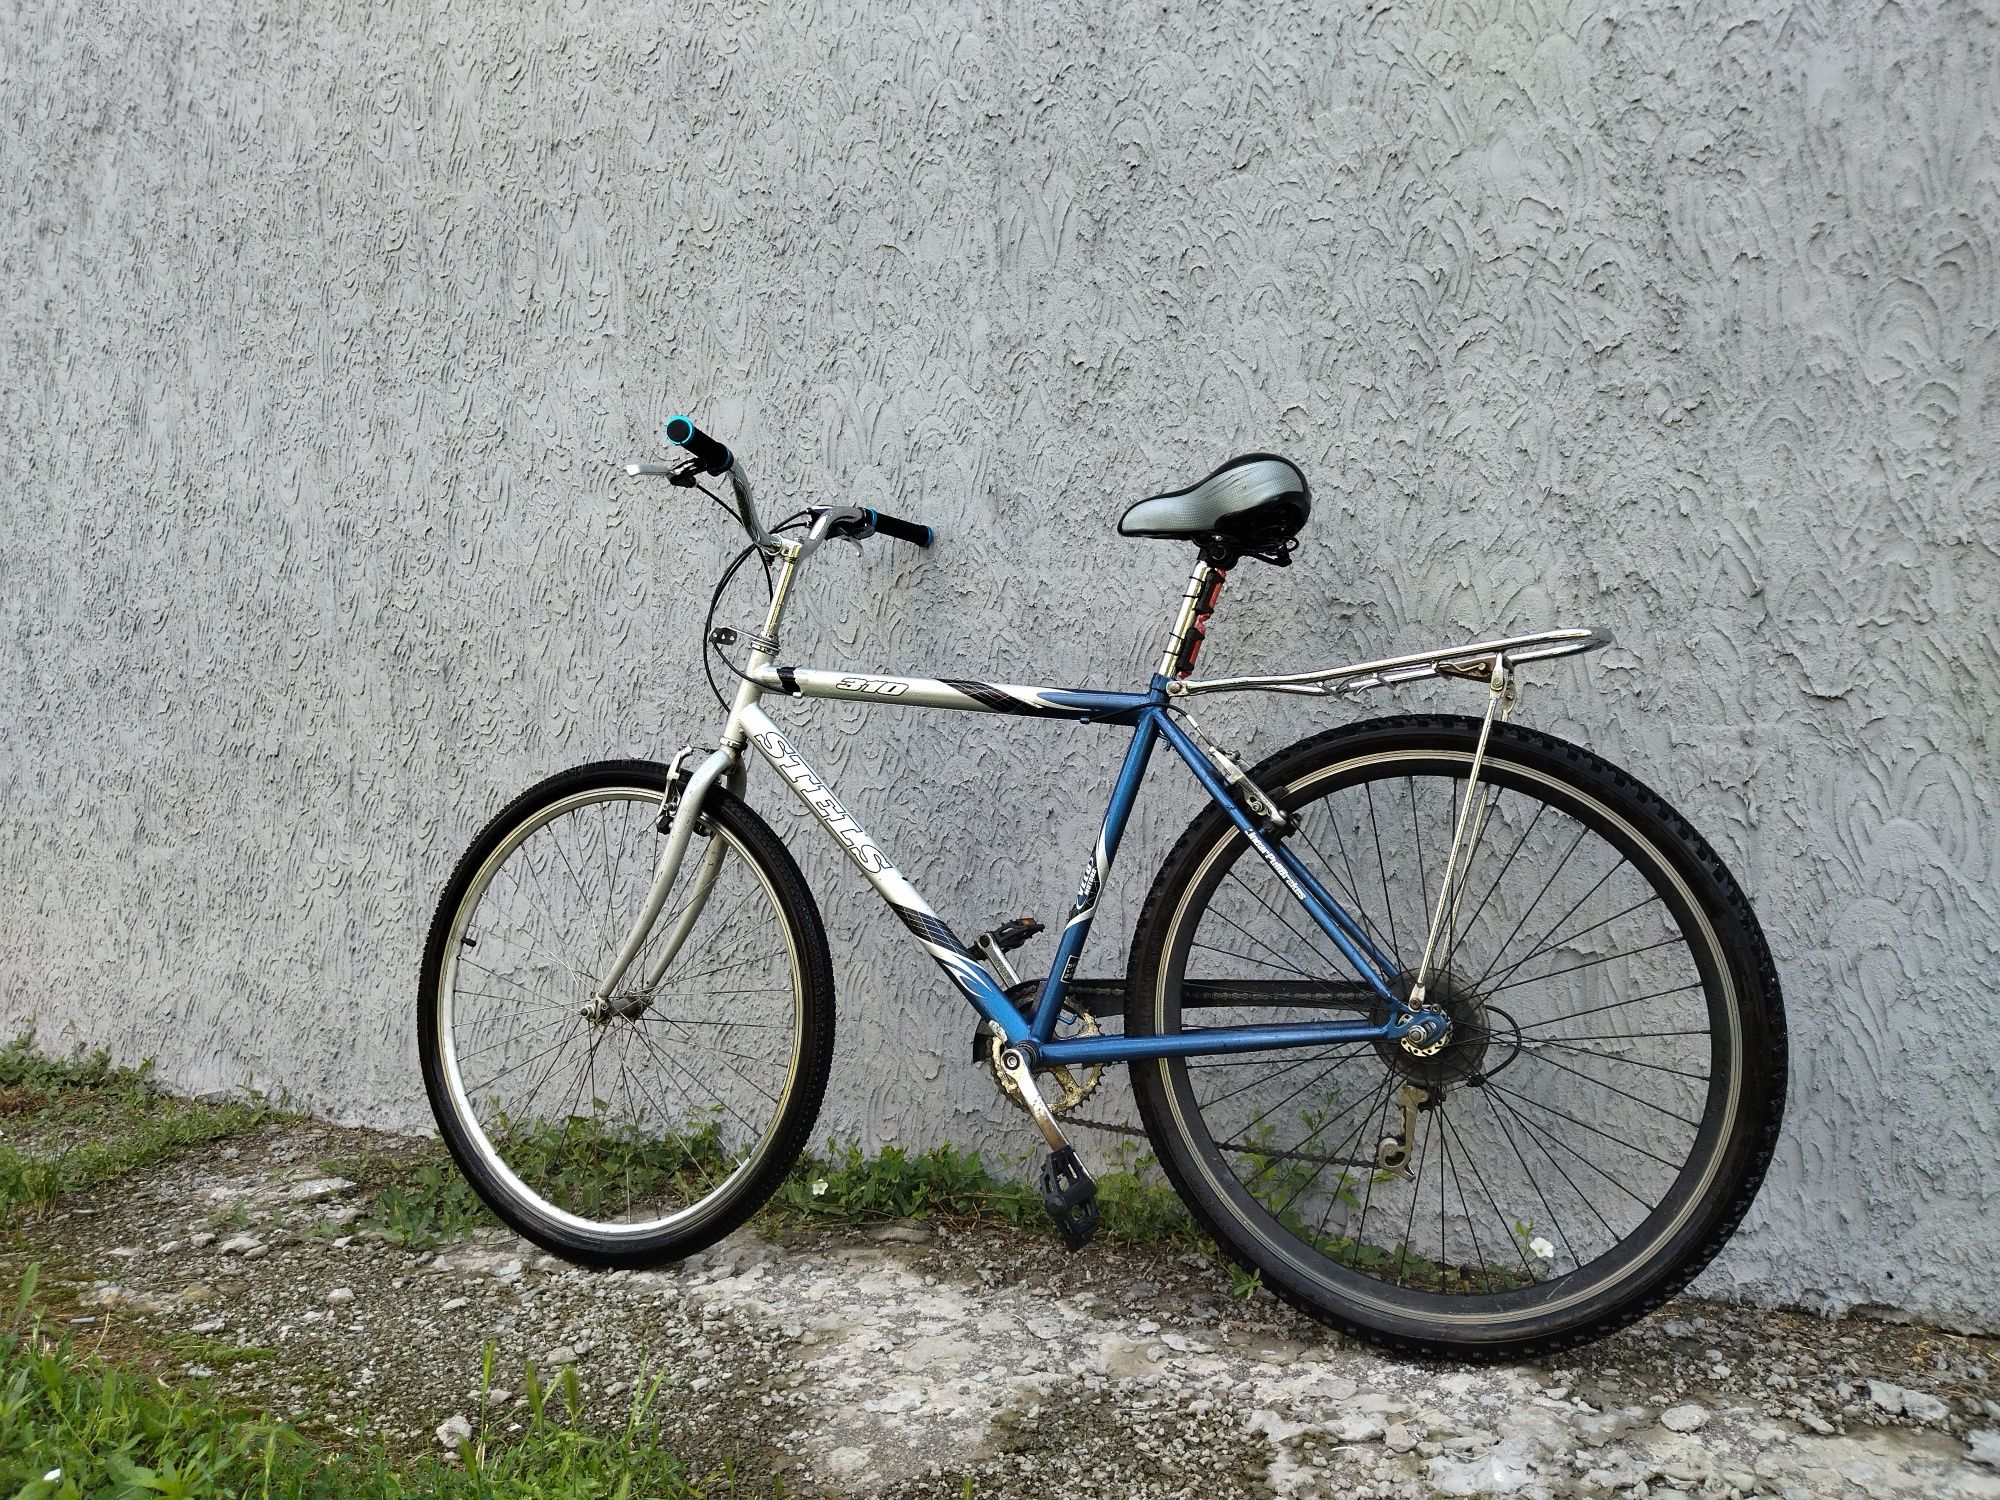 Велосипед Stels 310